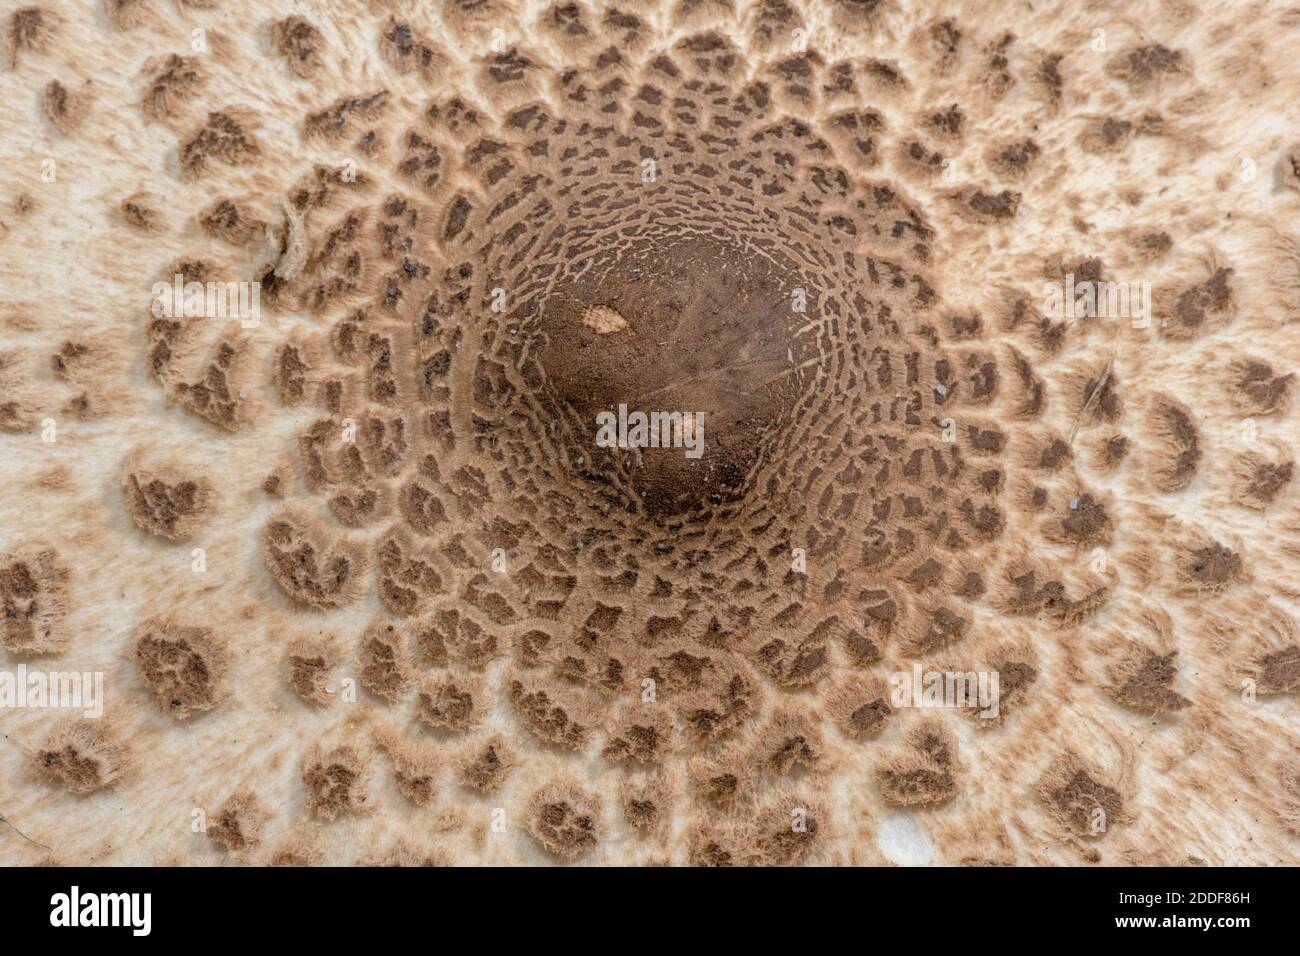 Cap of parasol mushroom, Macrolepiota procera in close-up Stock Photo